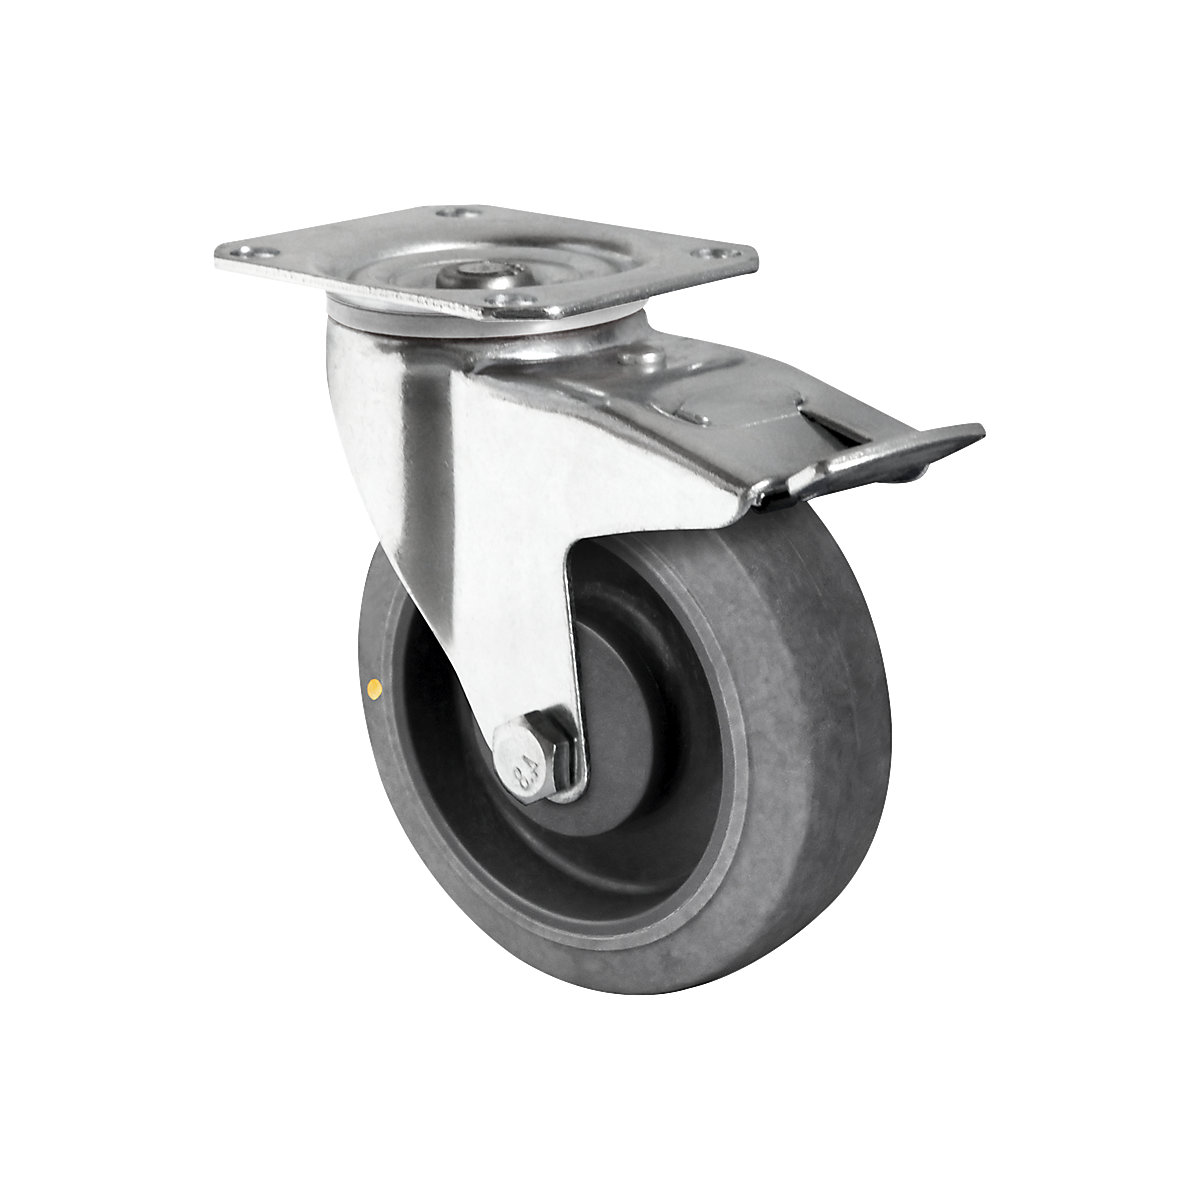 TPE tyre on PP rim, ESD, wheel Ø x width 125 x 40 mm, 2+ items, swivel castor with double stop